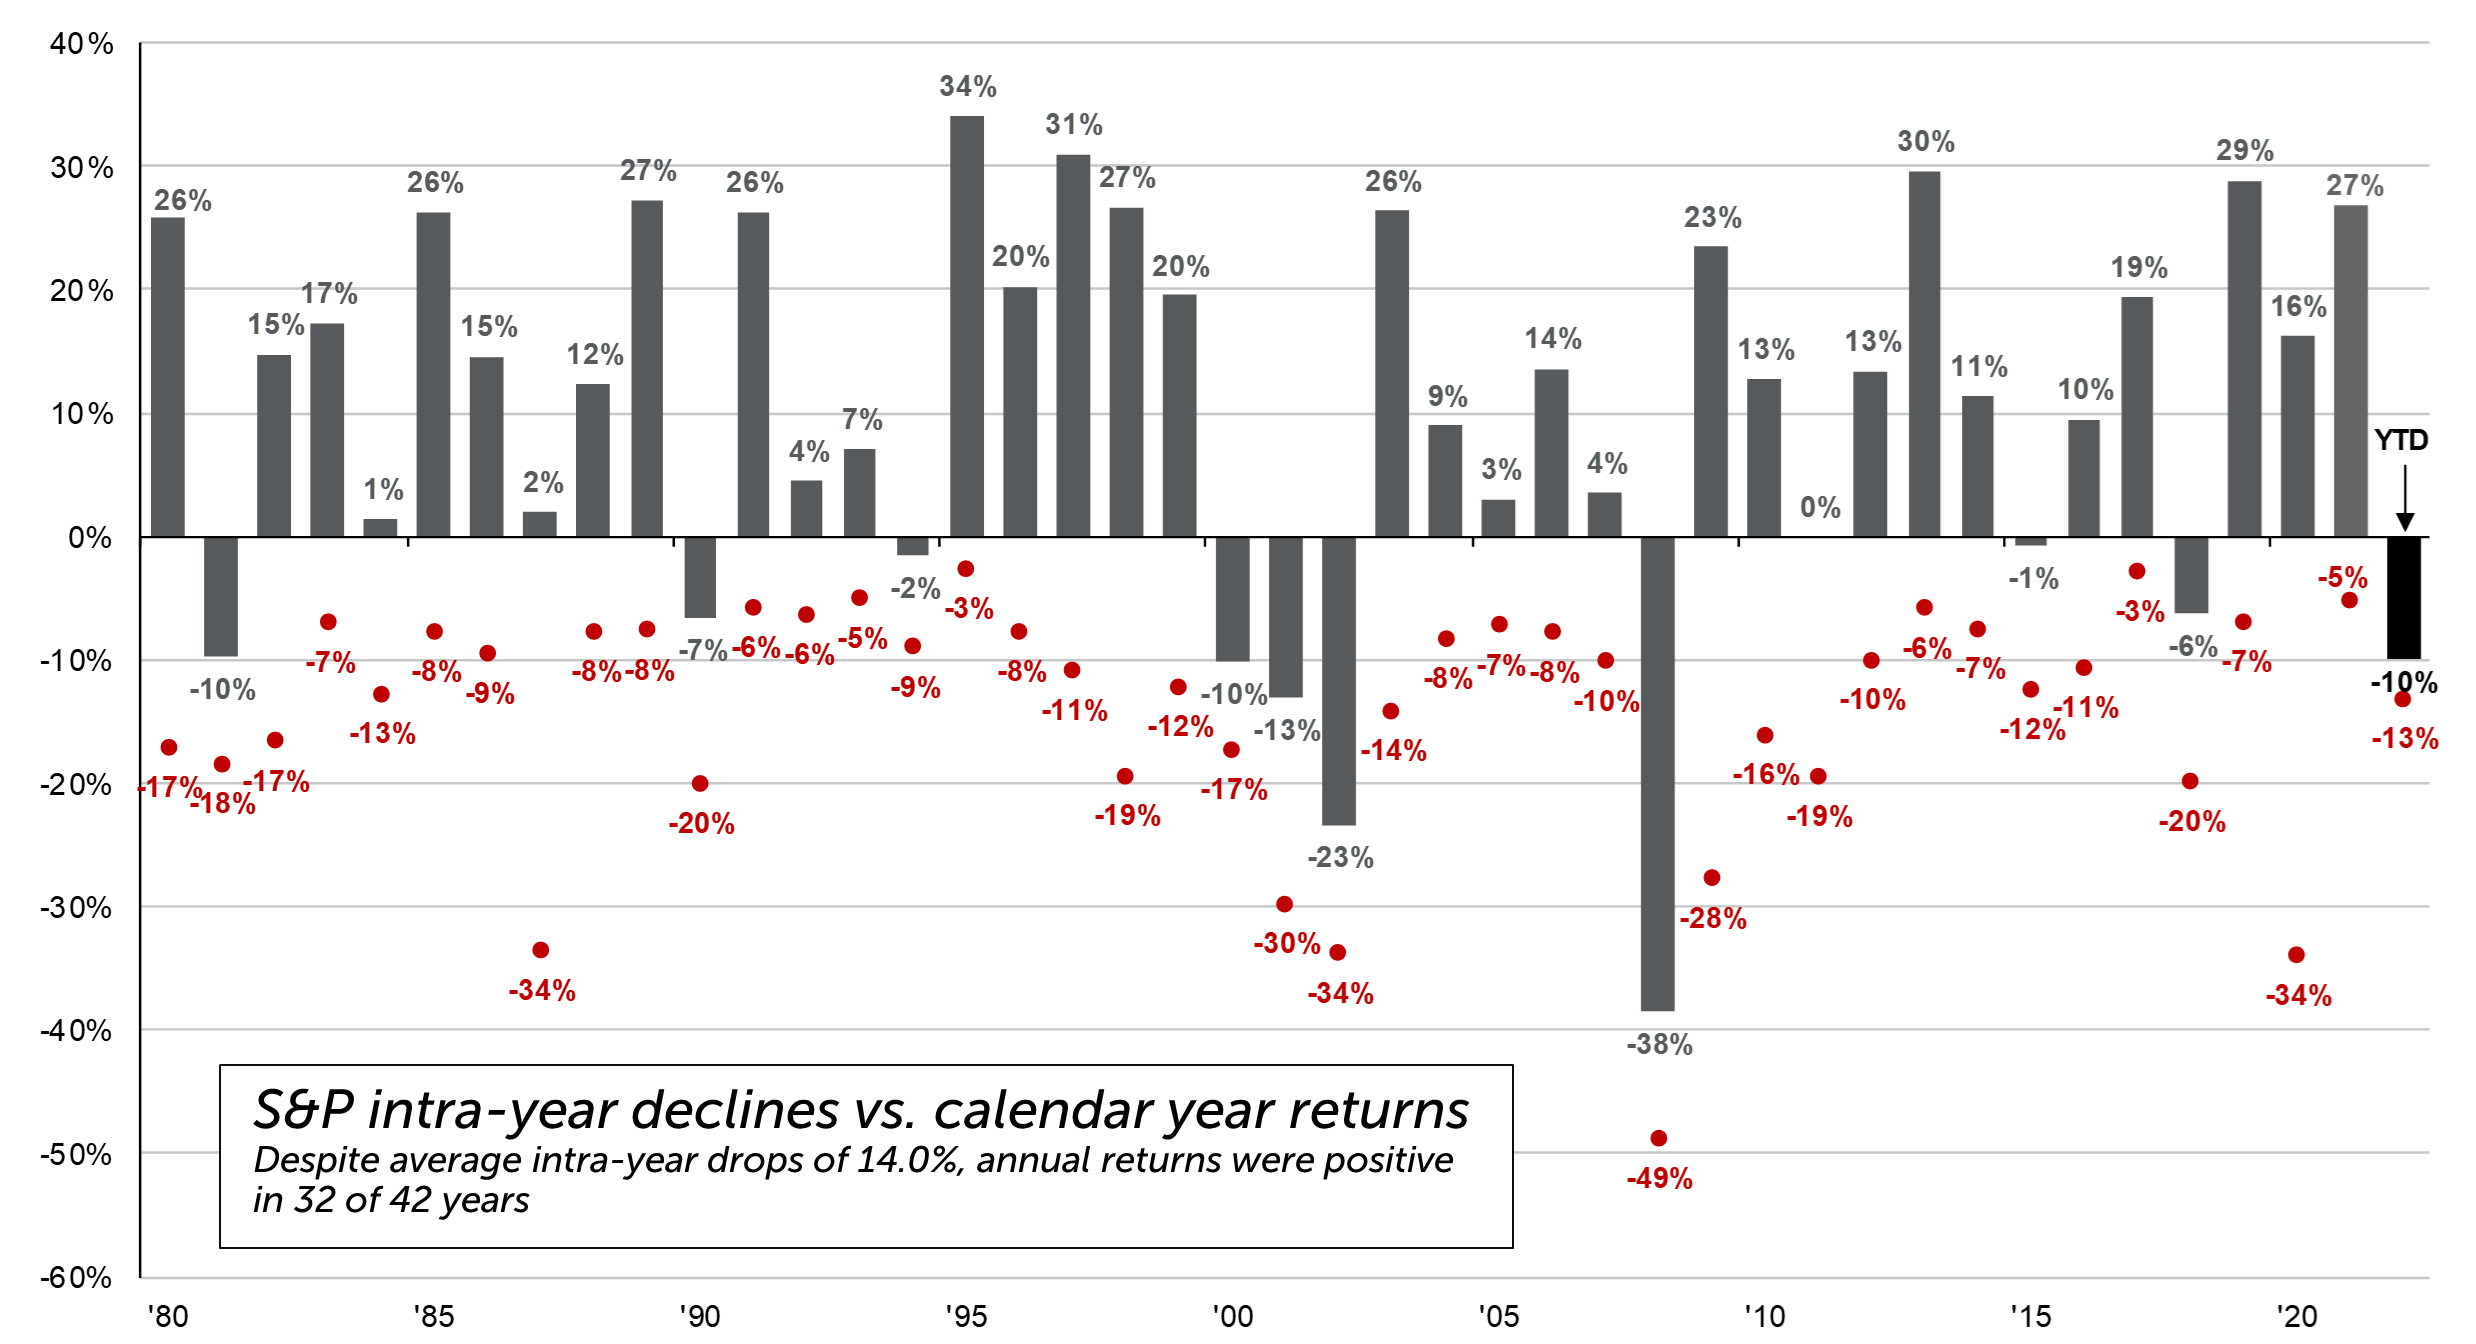 Bar graph depicting S&P intra-year declines vs. calendar year returns